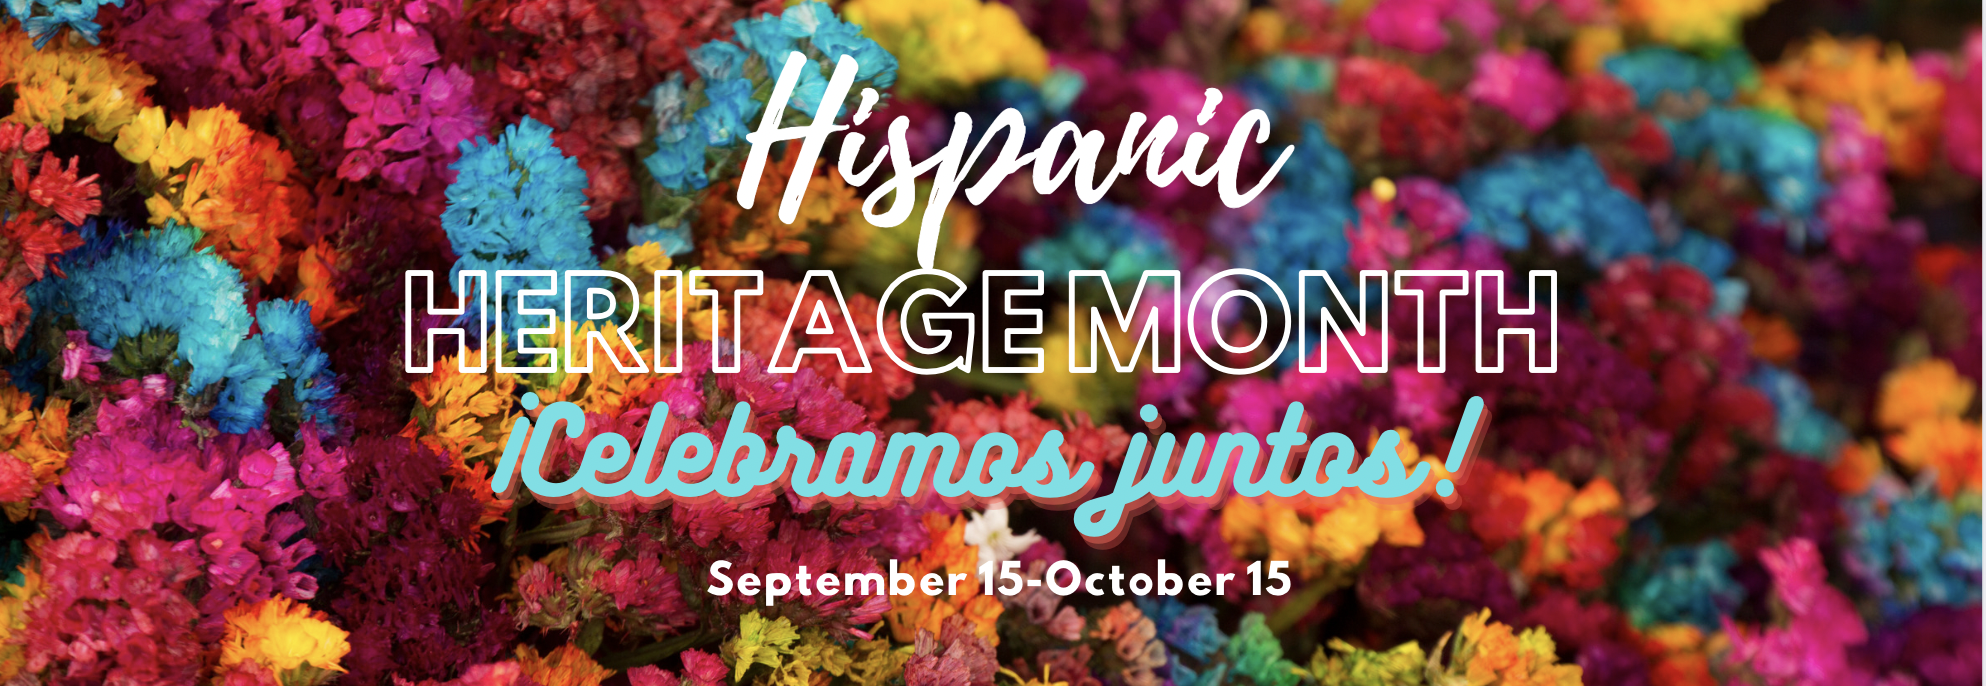 Hispanic Heritage Month September 15-October 15